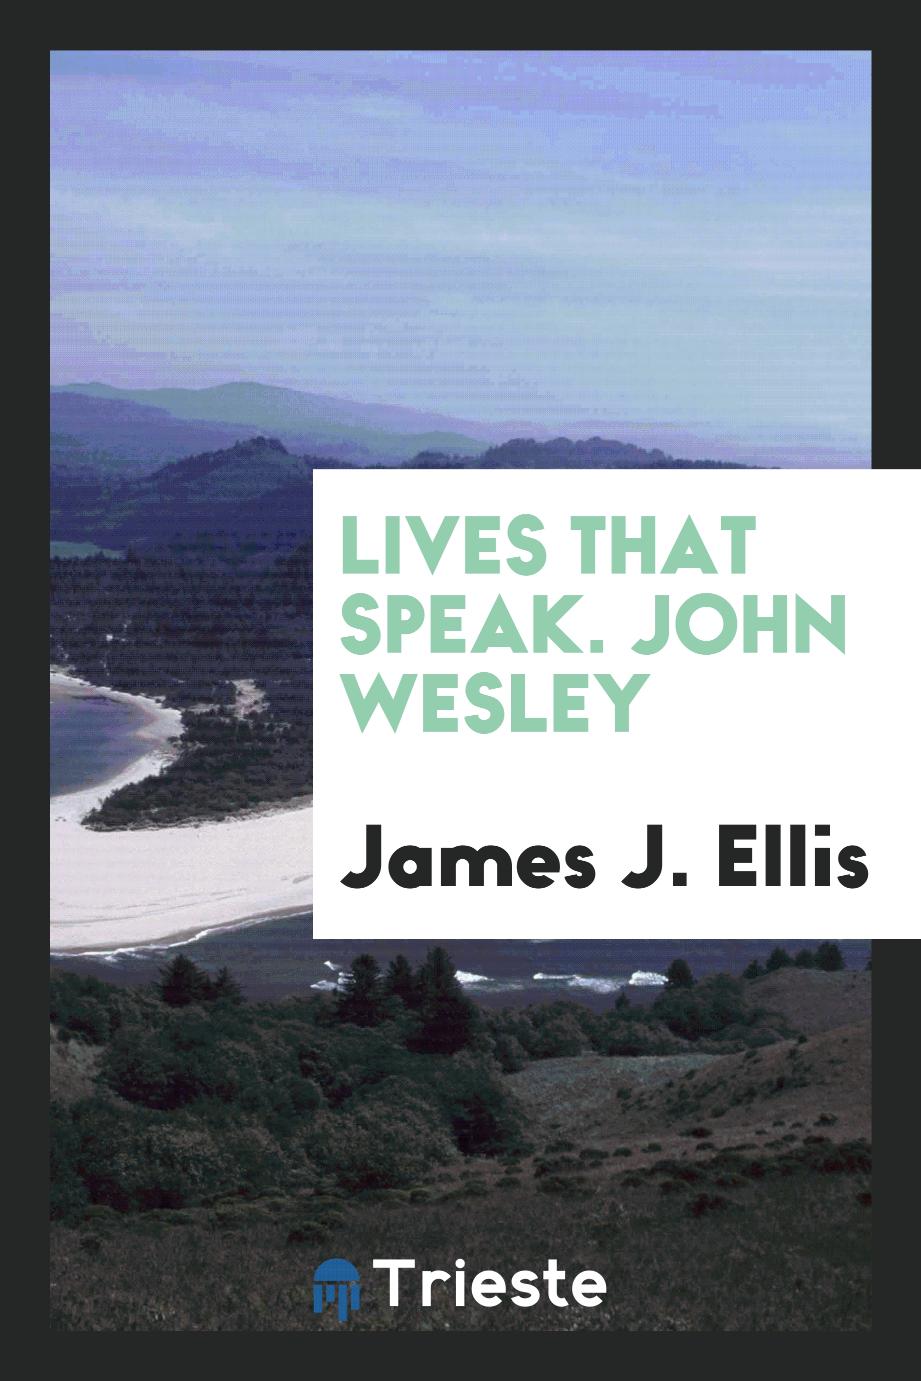 Lives that speak. John Wesley